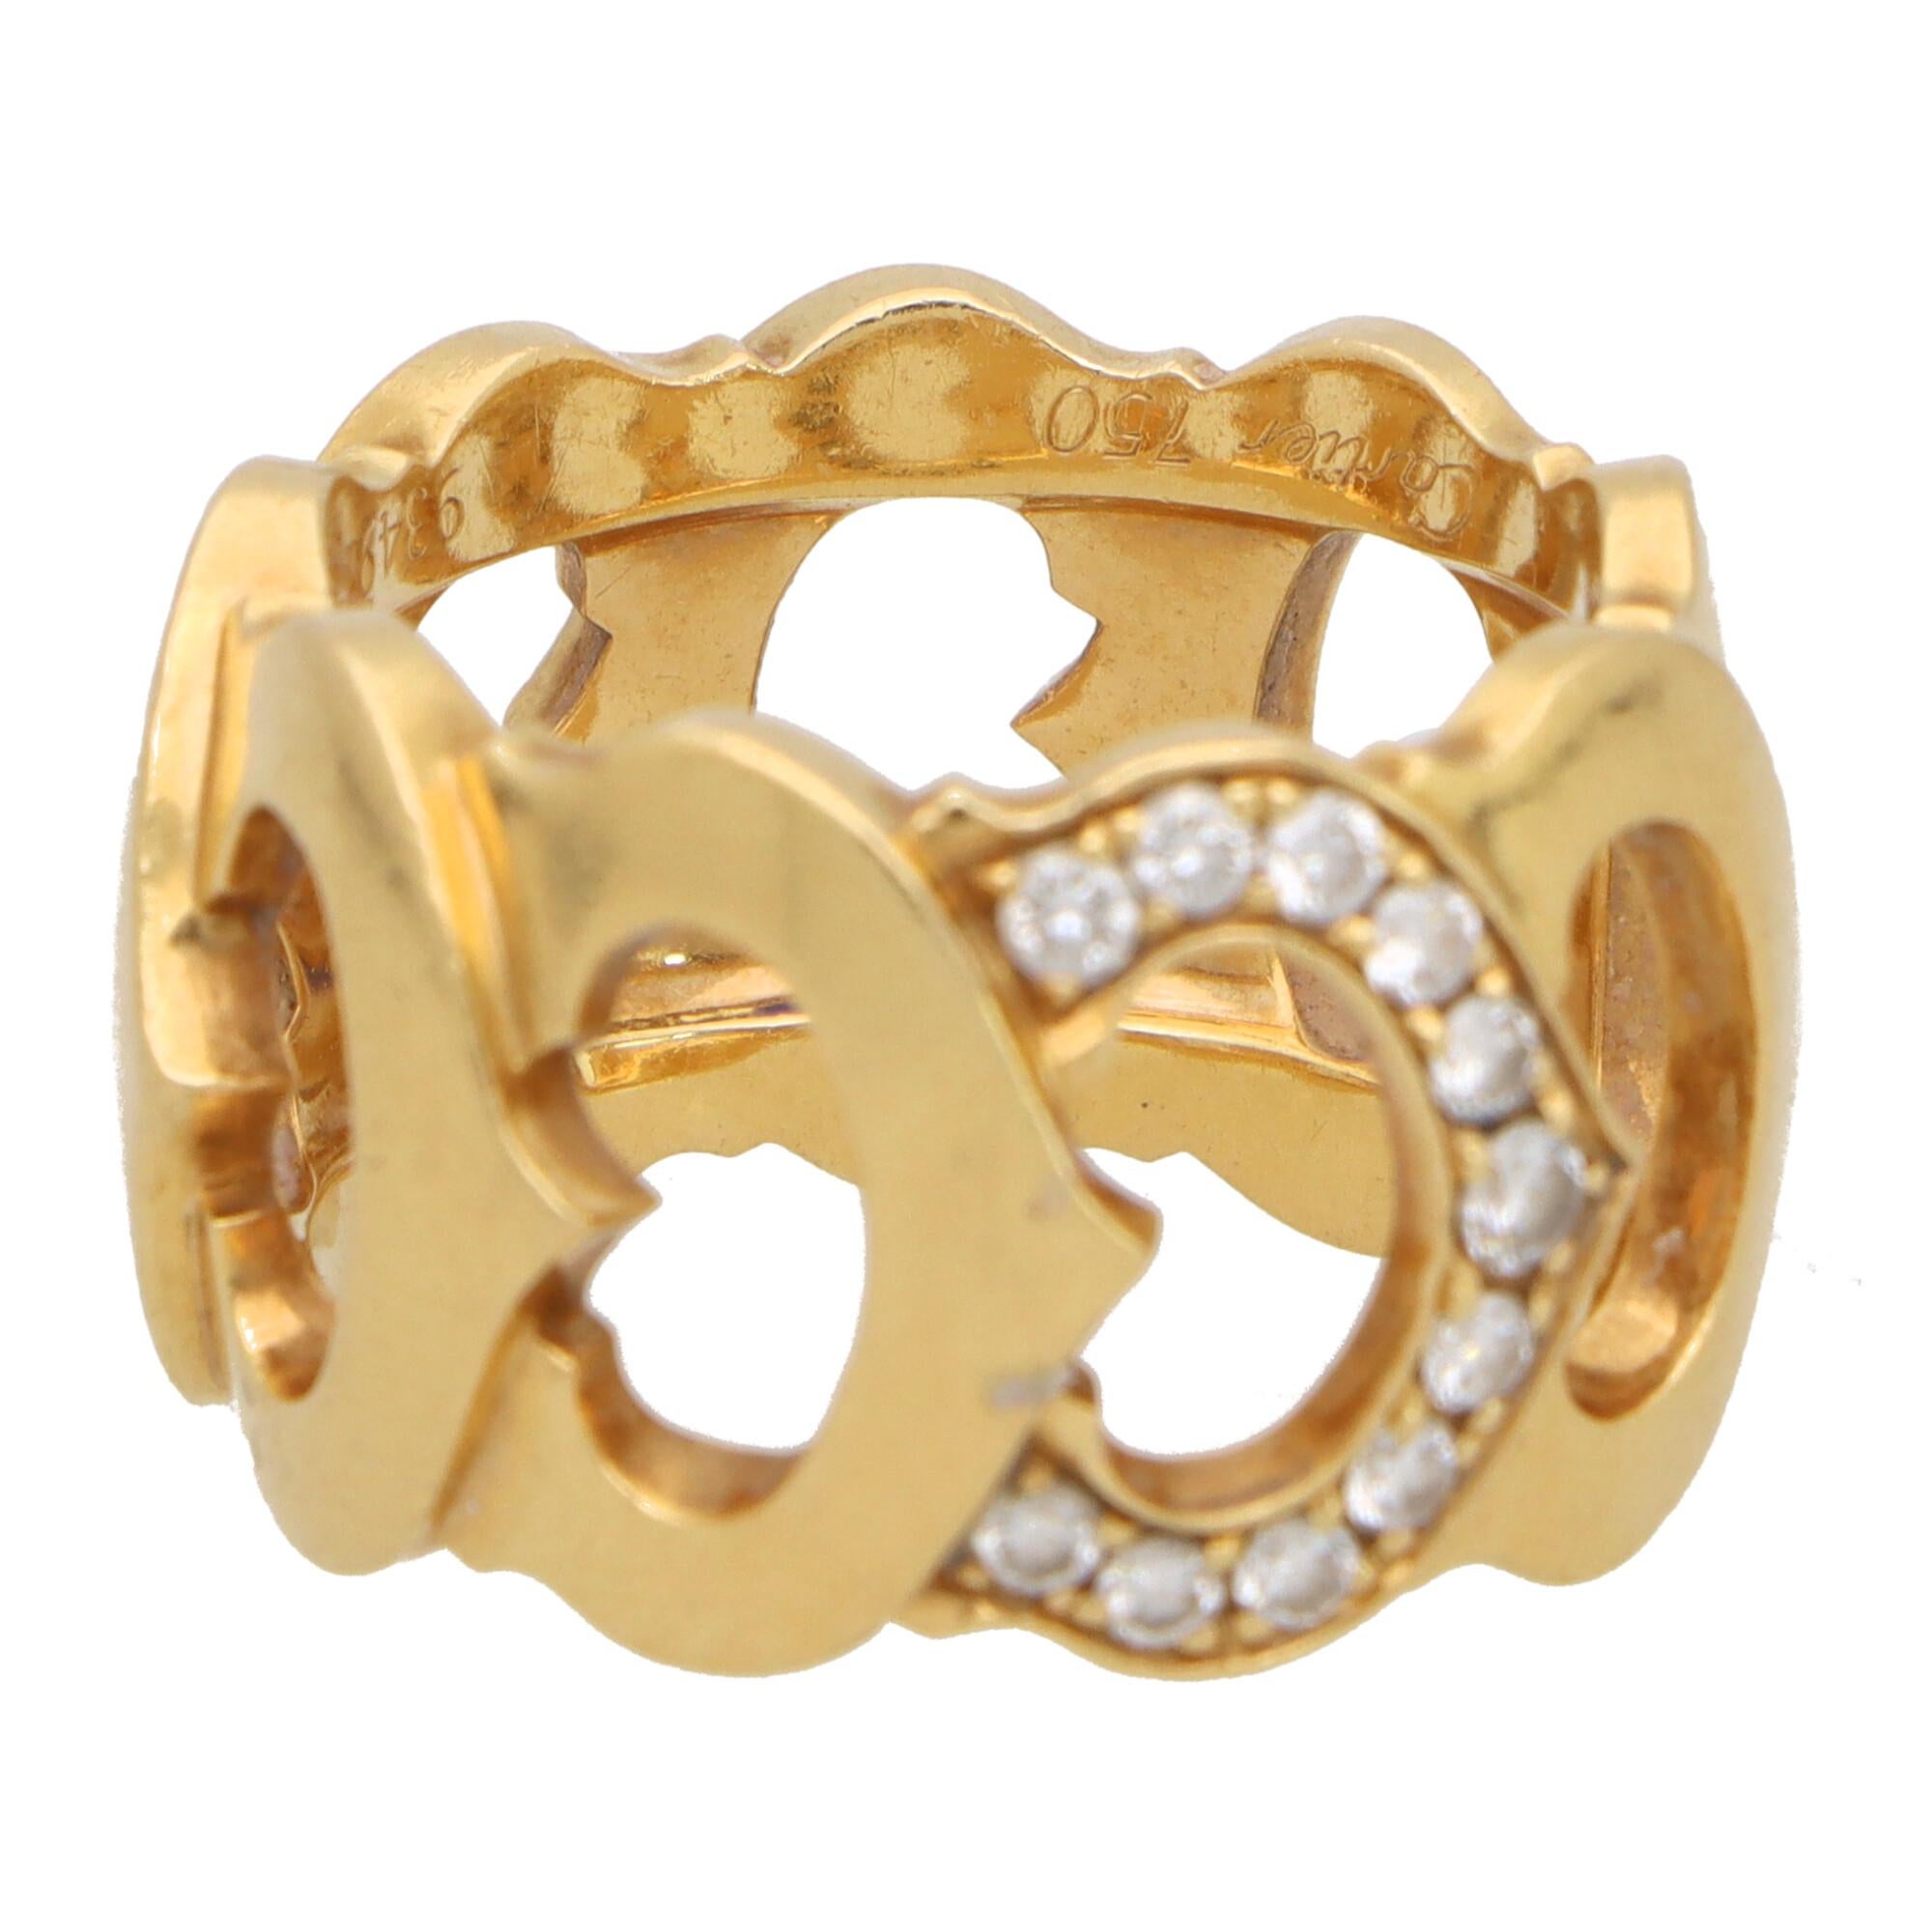 Vintage Cartier ‘C de Cartier’ Diamond Band Ring in 18k Yellow Gold 1